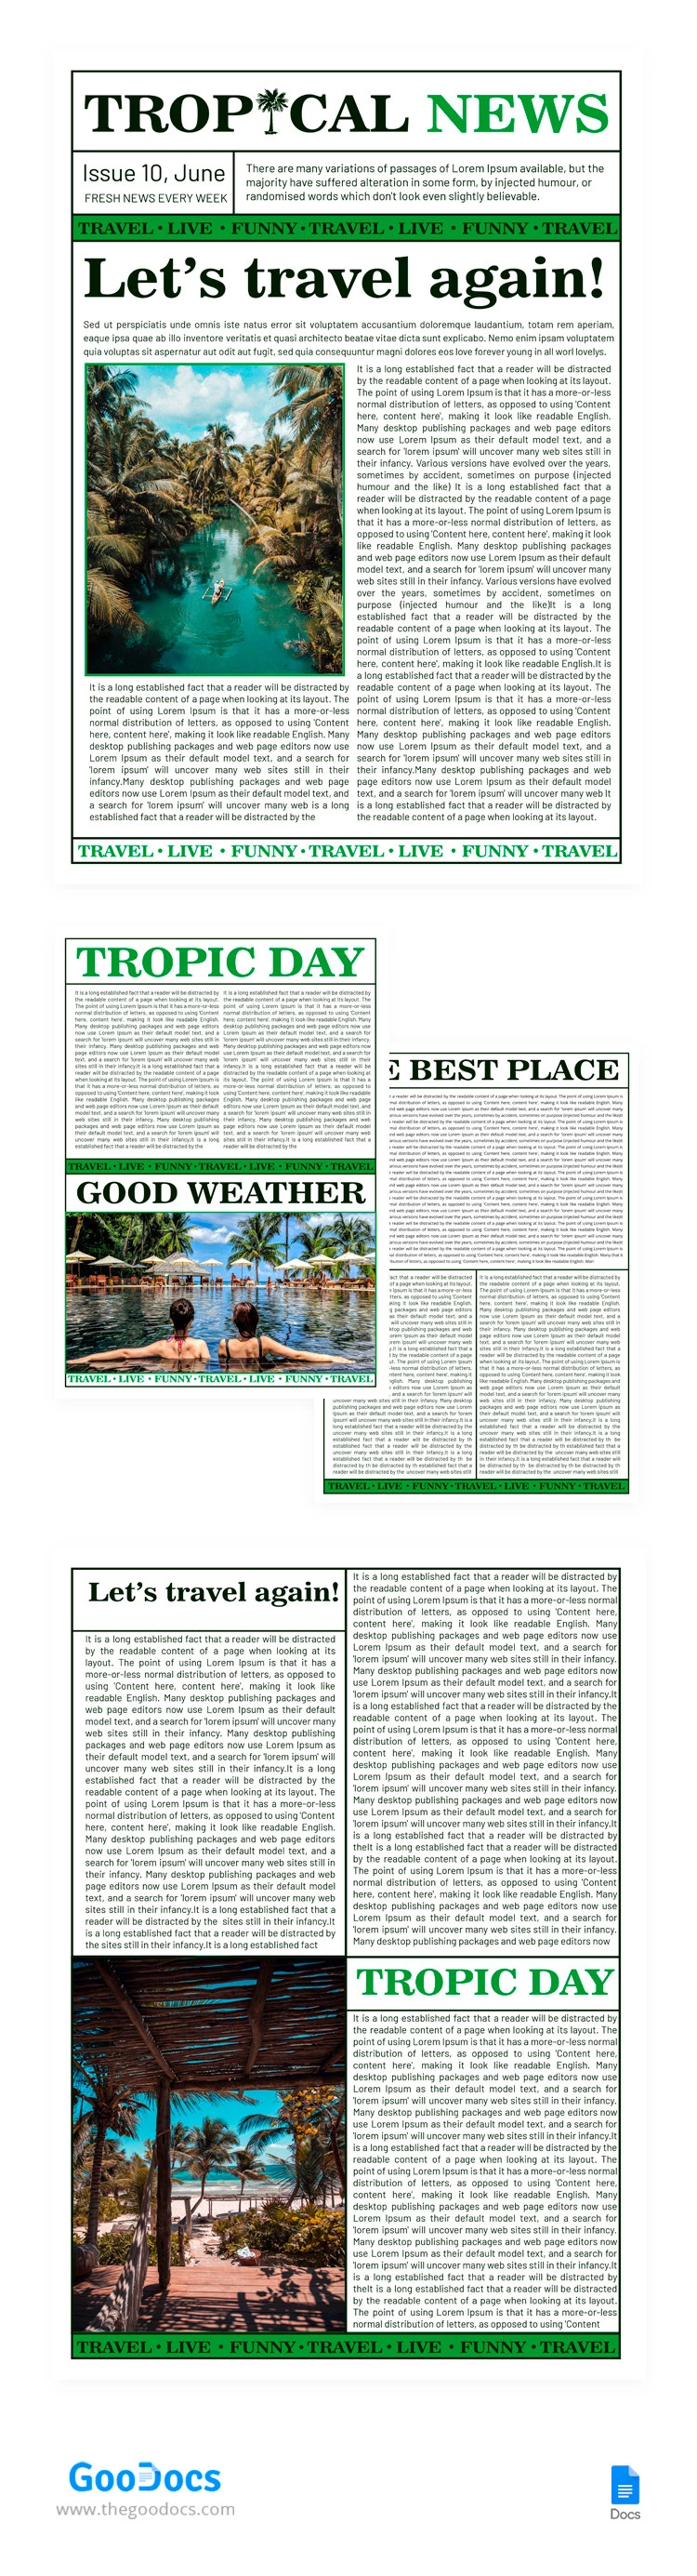 Journal tropical - free Google Docs Template - 10065441